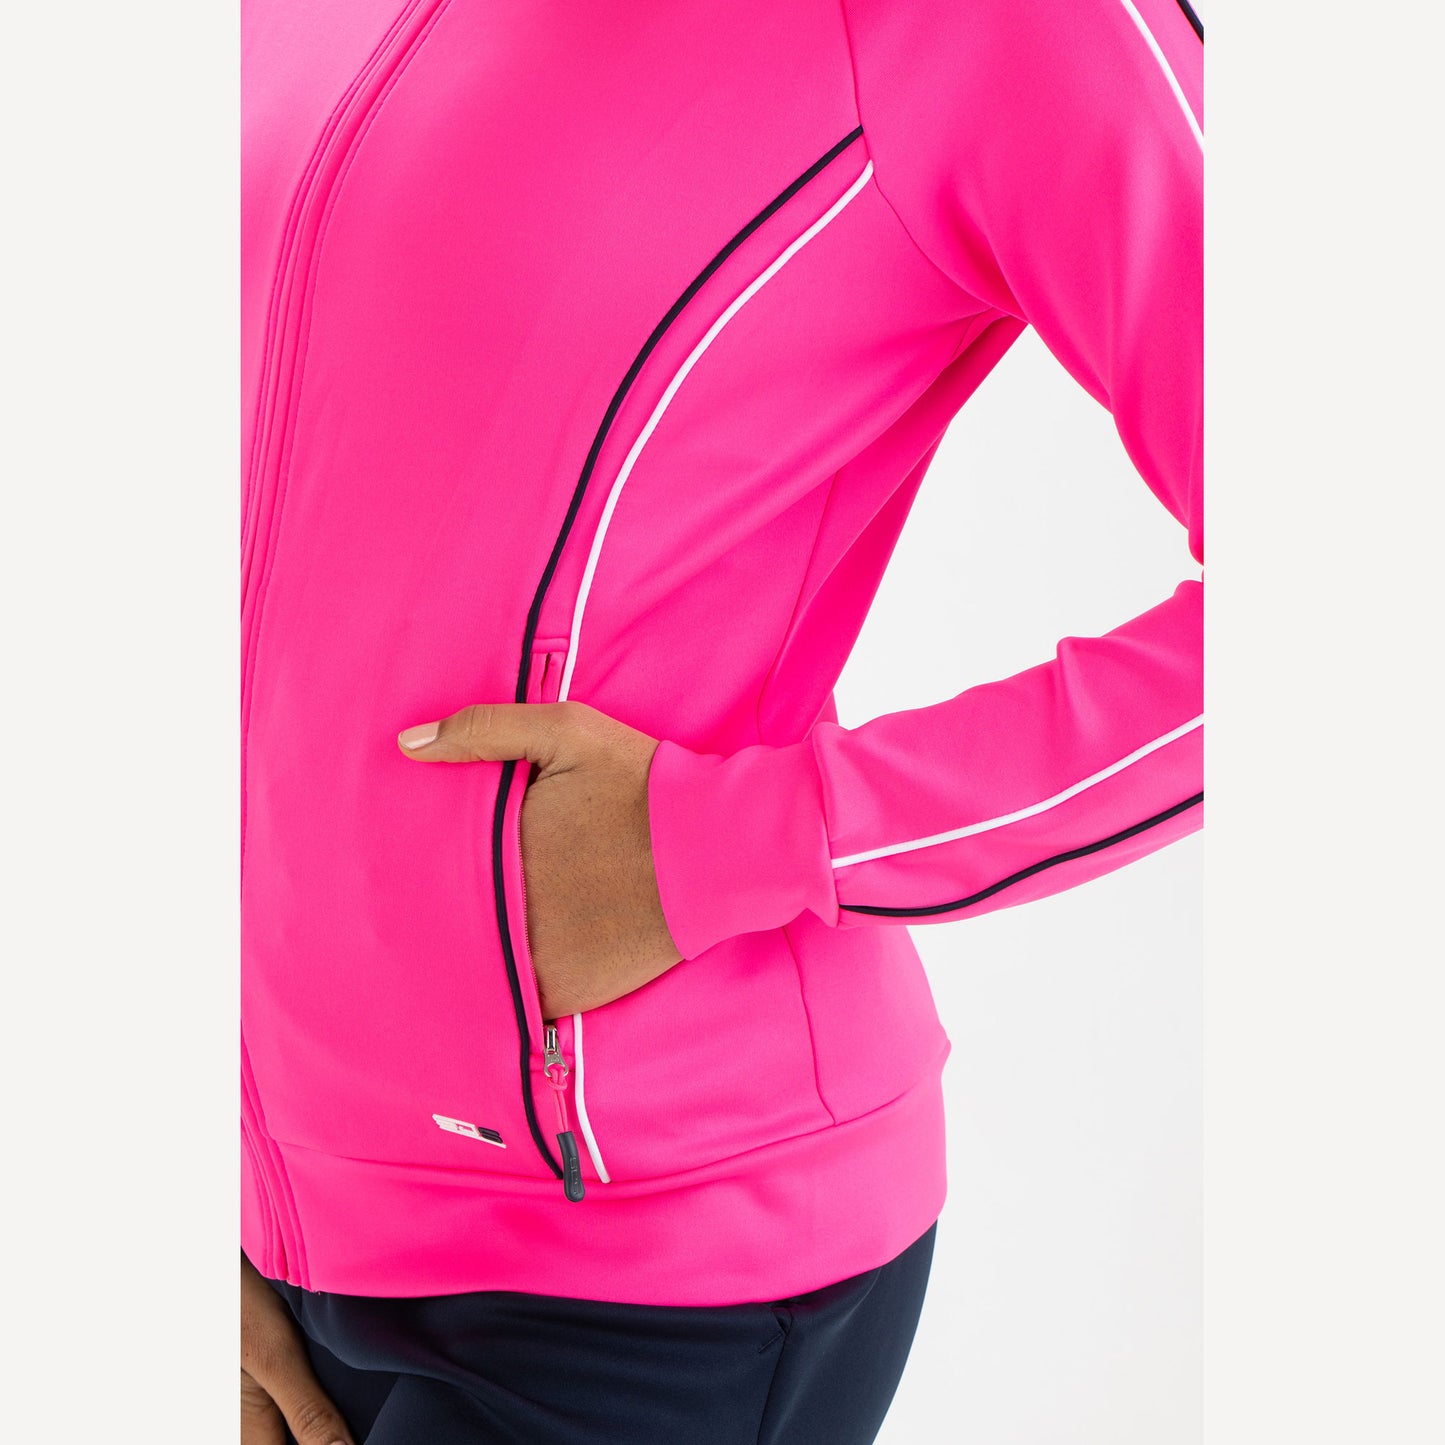 Sjeng Sports Aline Women's Tennis Jacket Pink (3)